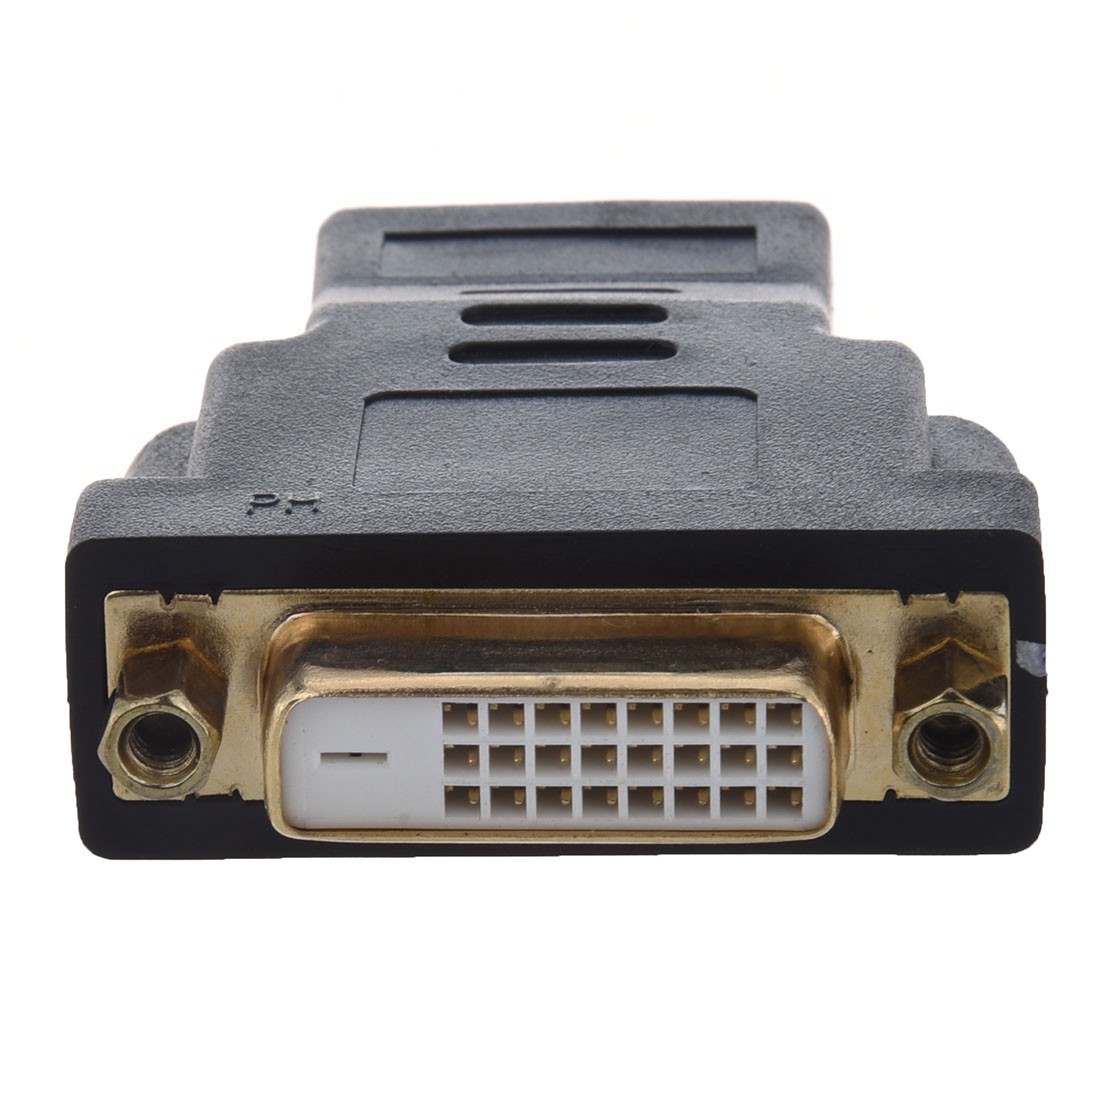 TV DVI-D Dual Link Female To HDMI Female Converter Adapter